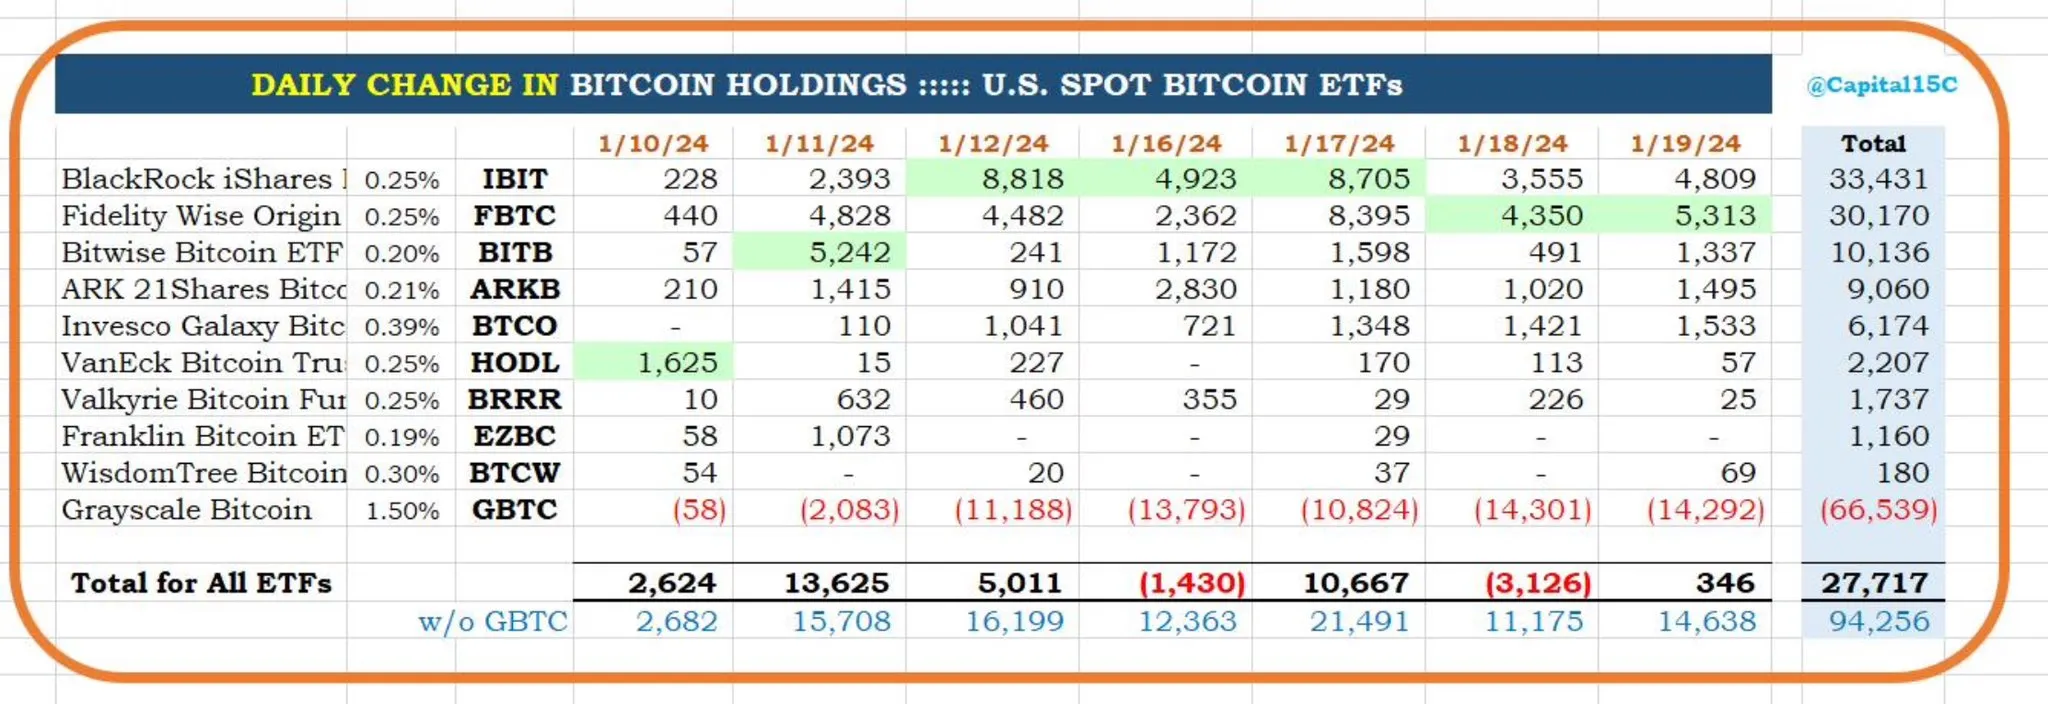 Spot ETF Bitcoin holdings. Source: X/@Capital15C